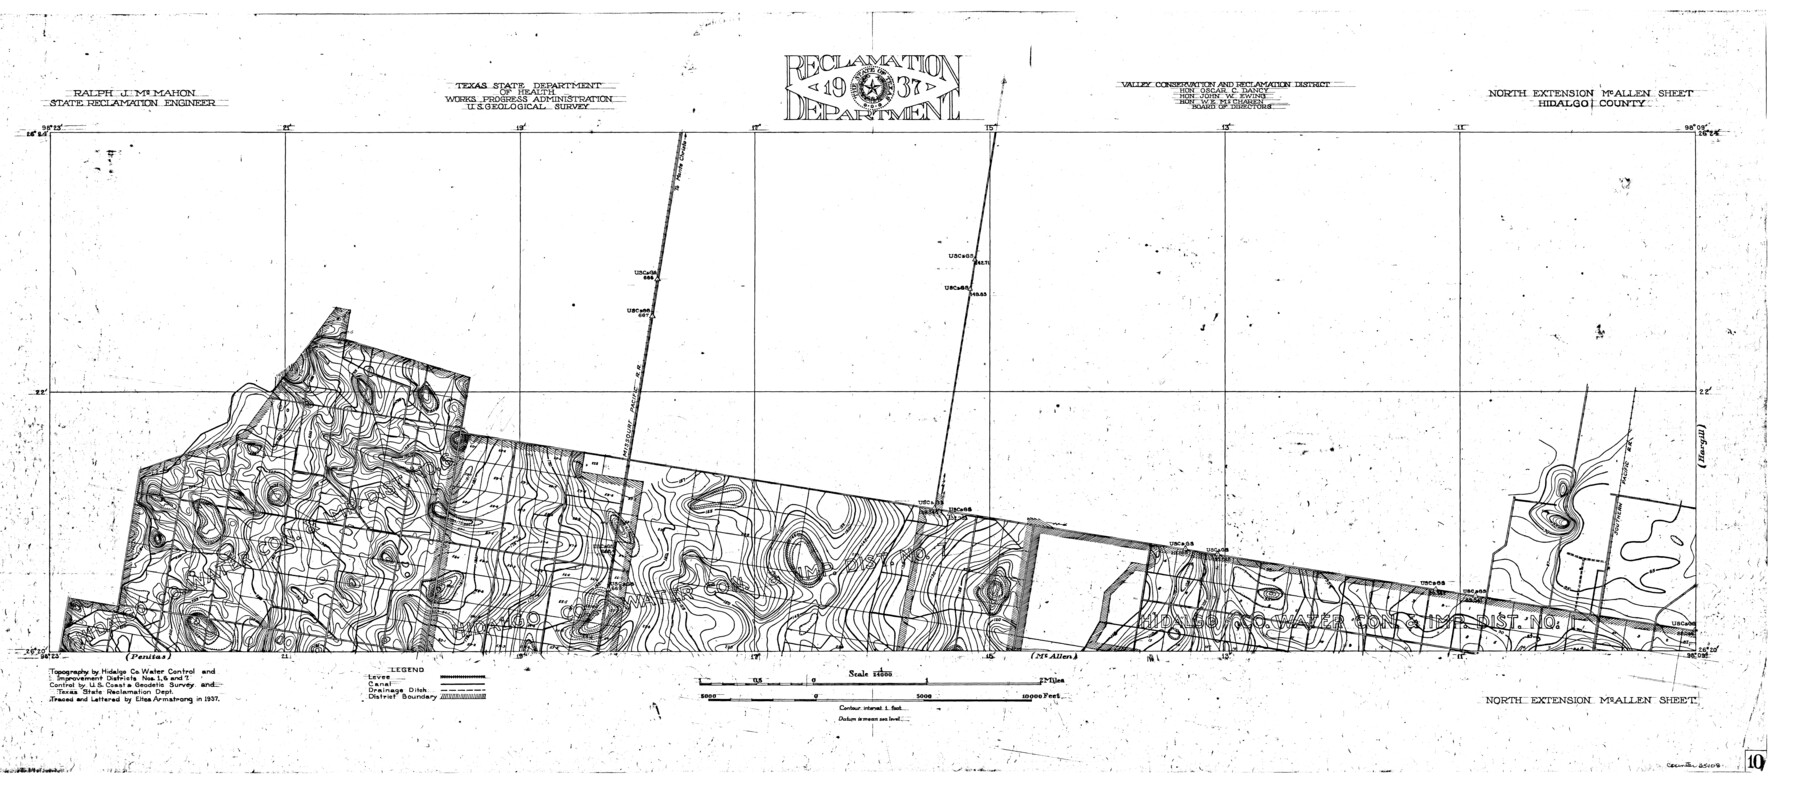 65108, Rio Grande, North Extension McAllen Sheet, General Map Collection